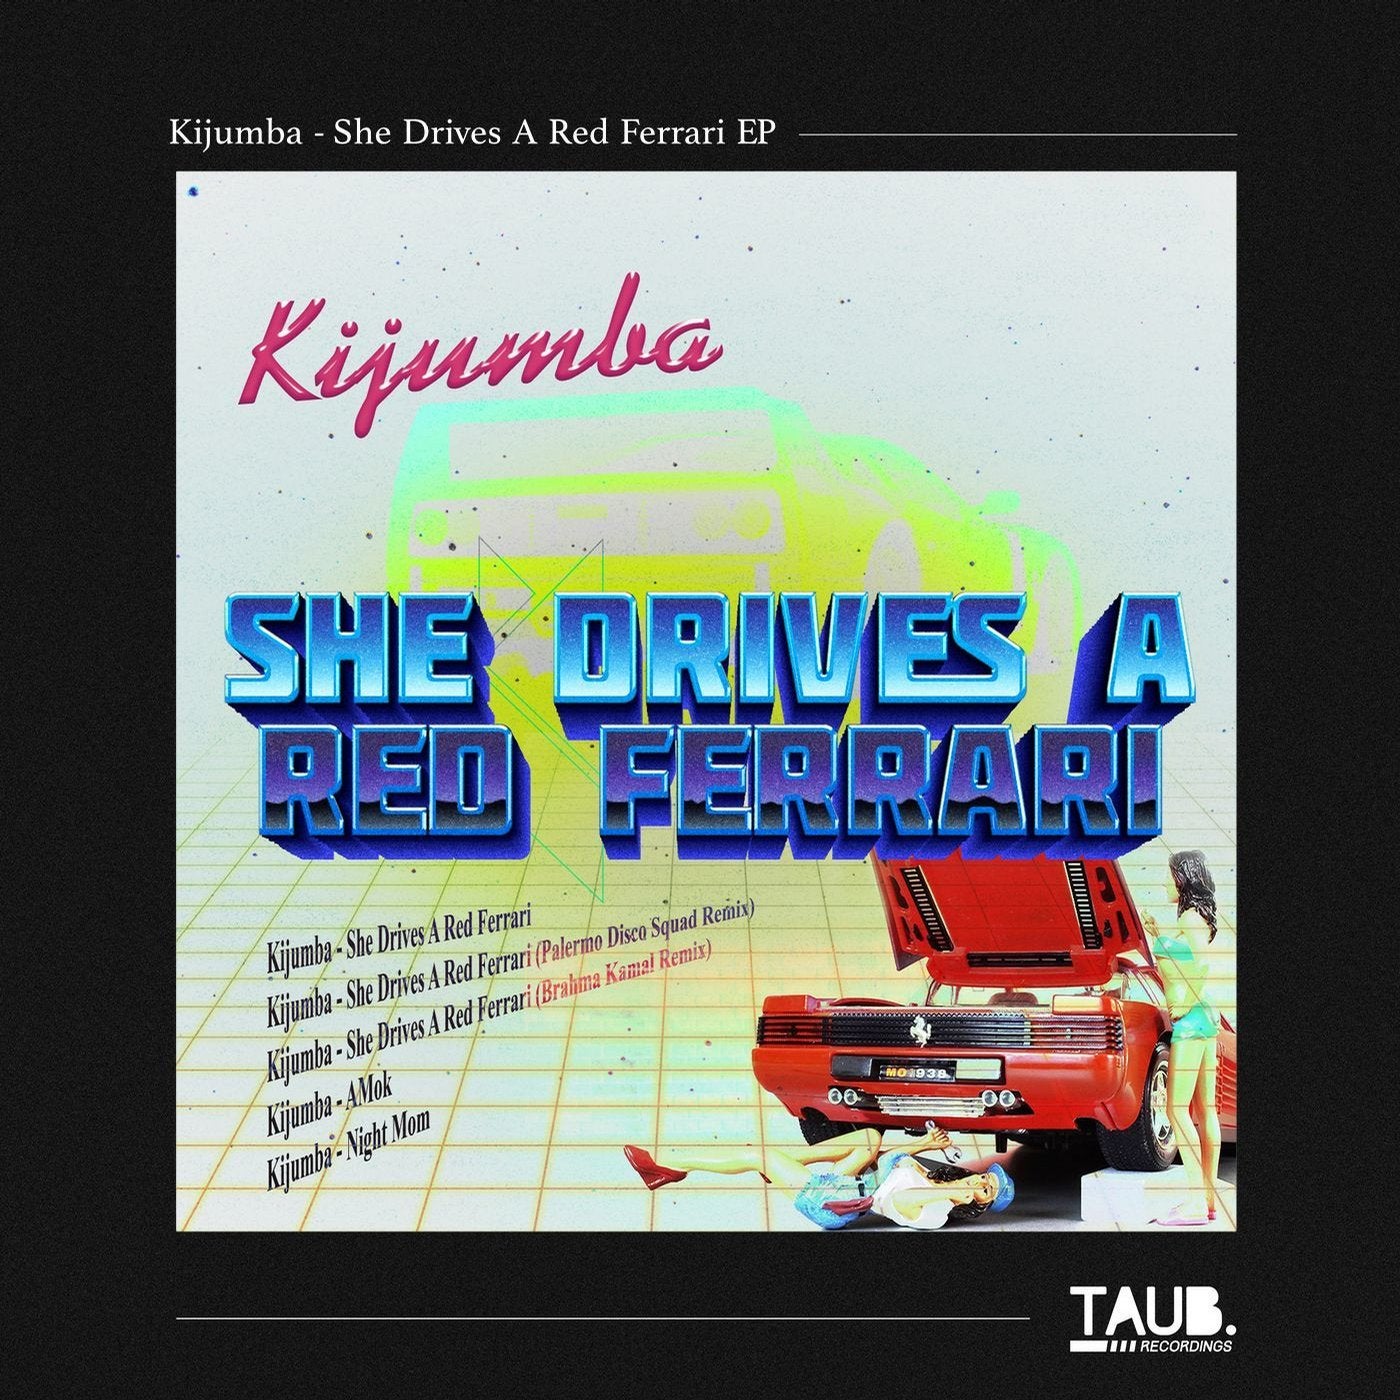 Kijumba music download - Beatport